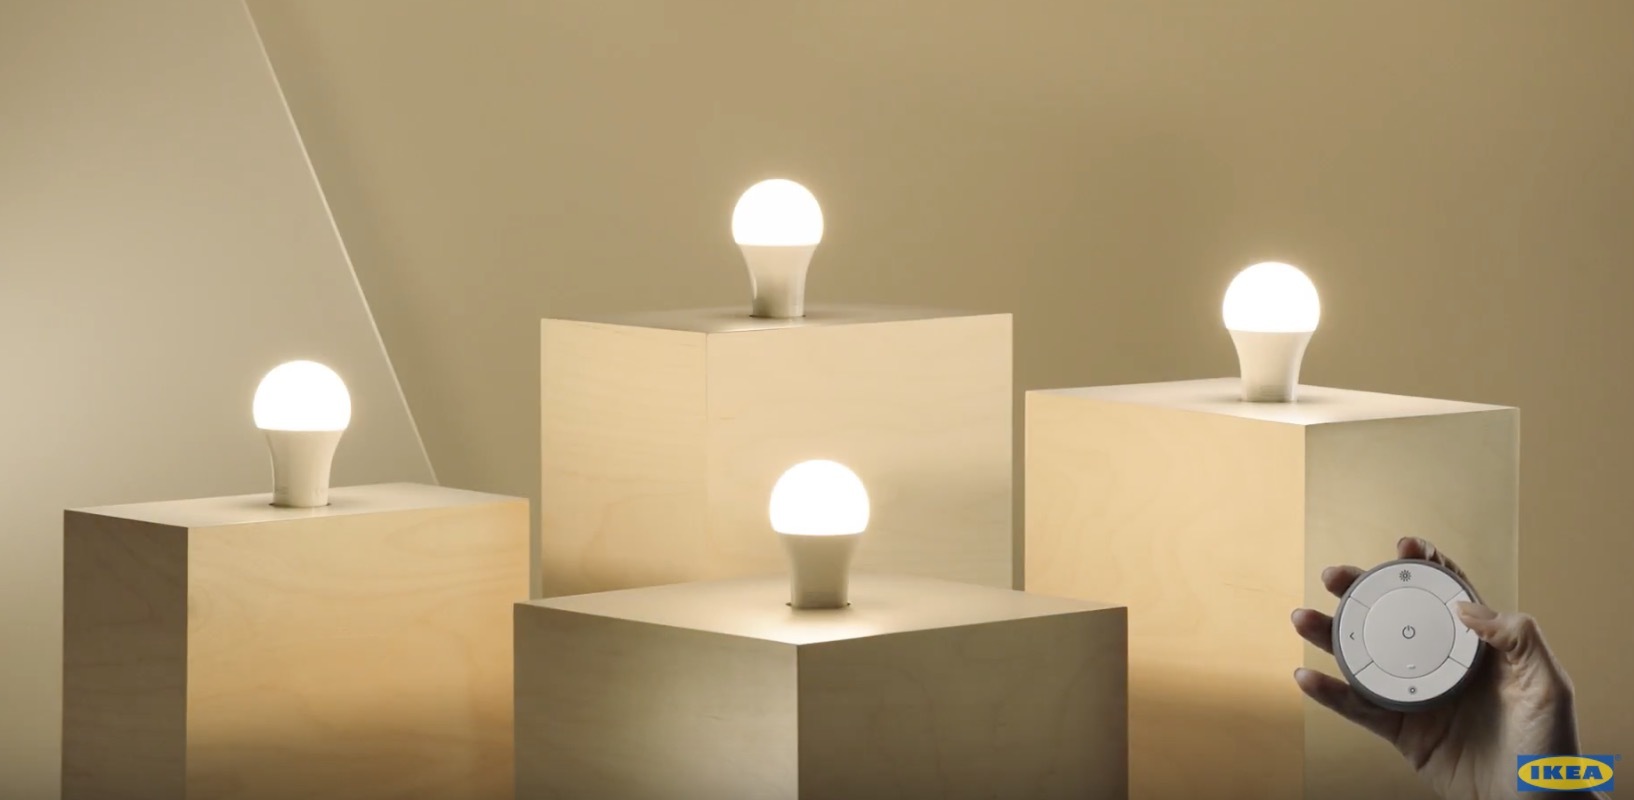 Iluminación Inteligente - Smart Lighting - ¡Compra ya! - IKEA